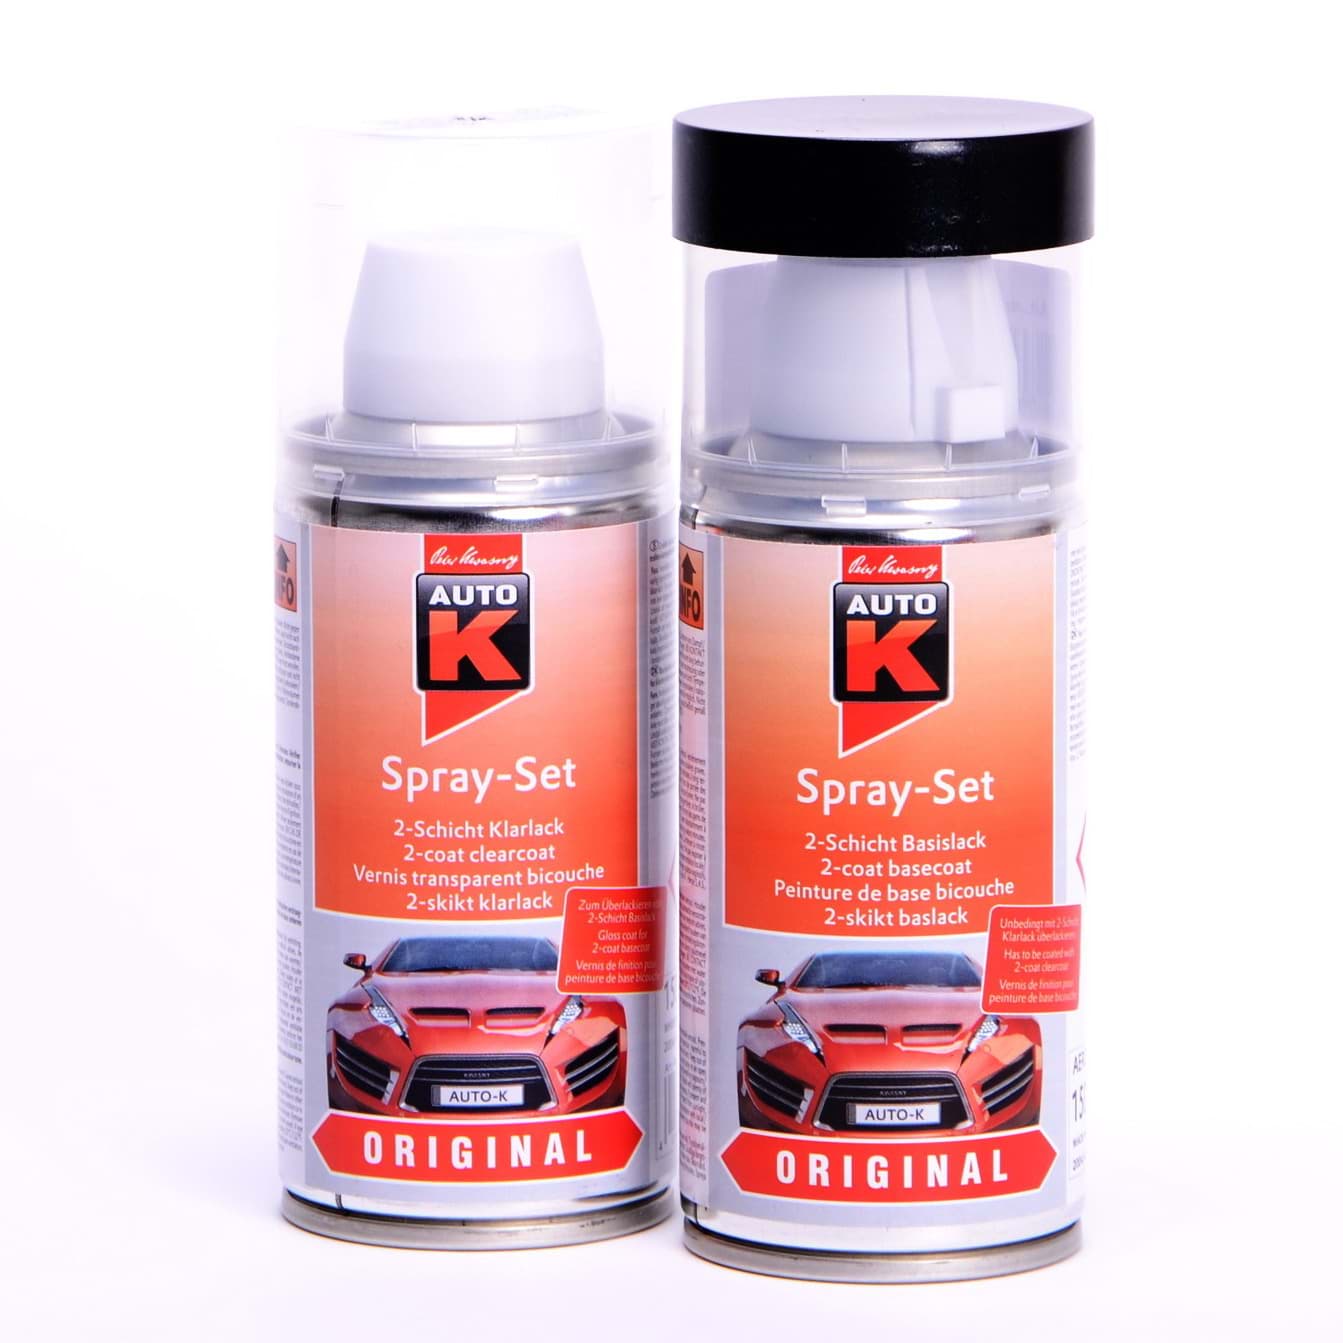 Afbeelding van Auto-K Spray-Set Autolack für Opel 168 Metro Blau met 21473